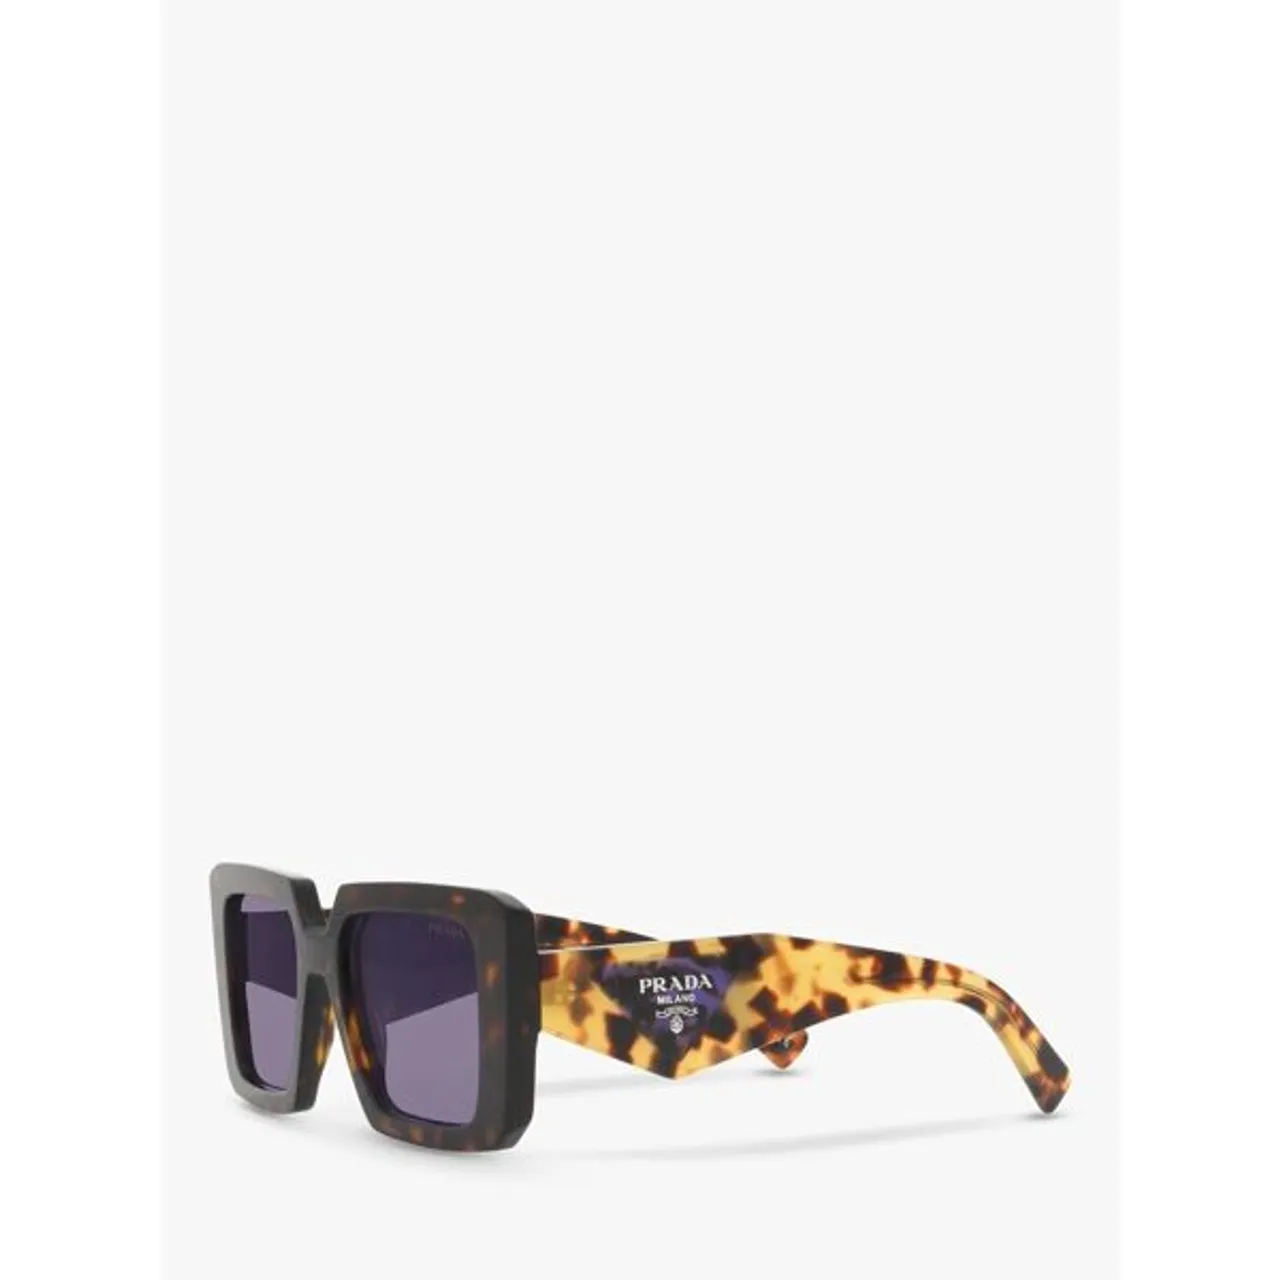 Prada PR 23YS Women's Chunky Square Sunglasses, Tortoise/Violet - Tortoise/Violet - Female